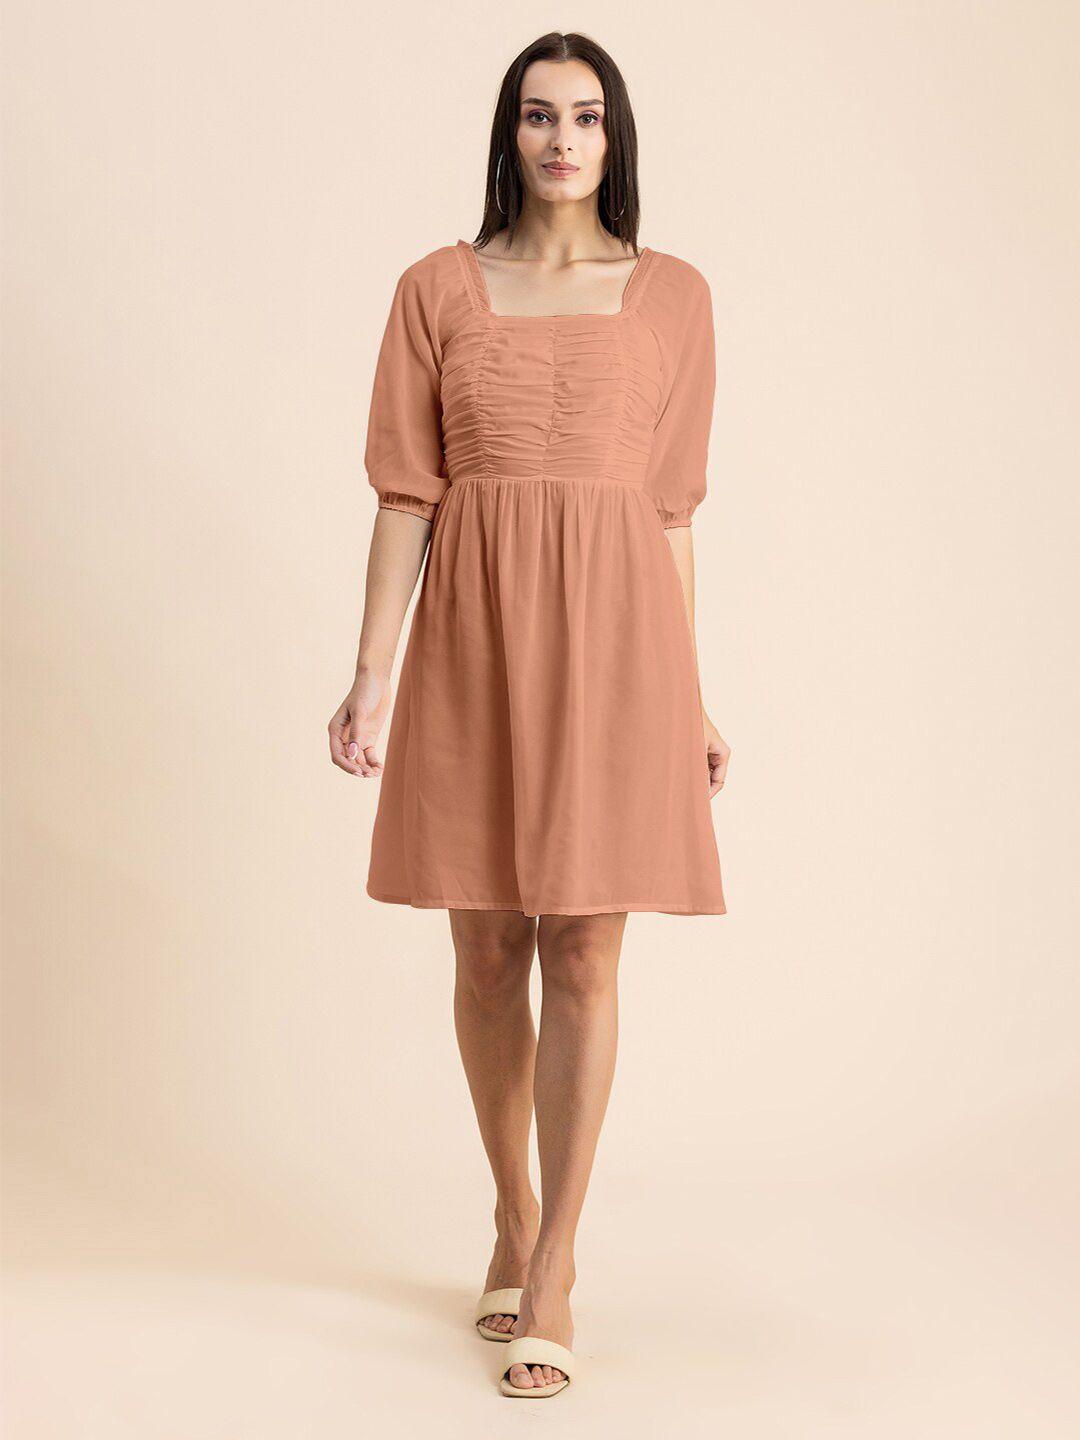 moomaya-peach-coloured-fit-&-flare-dress